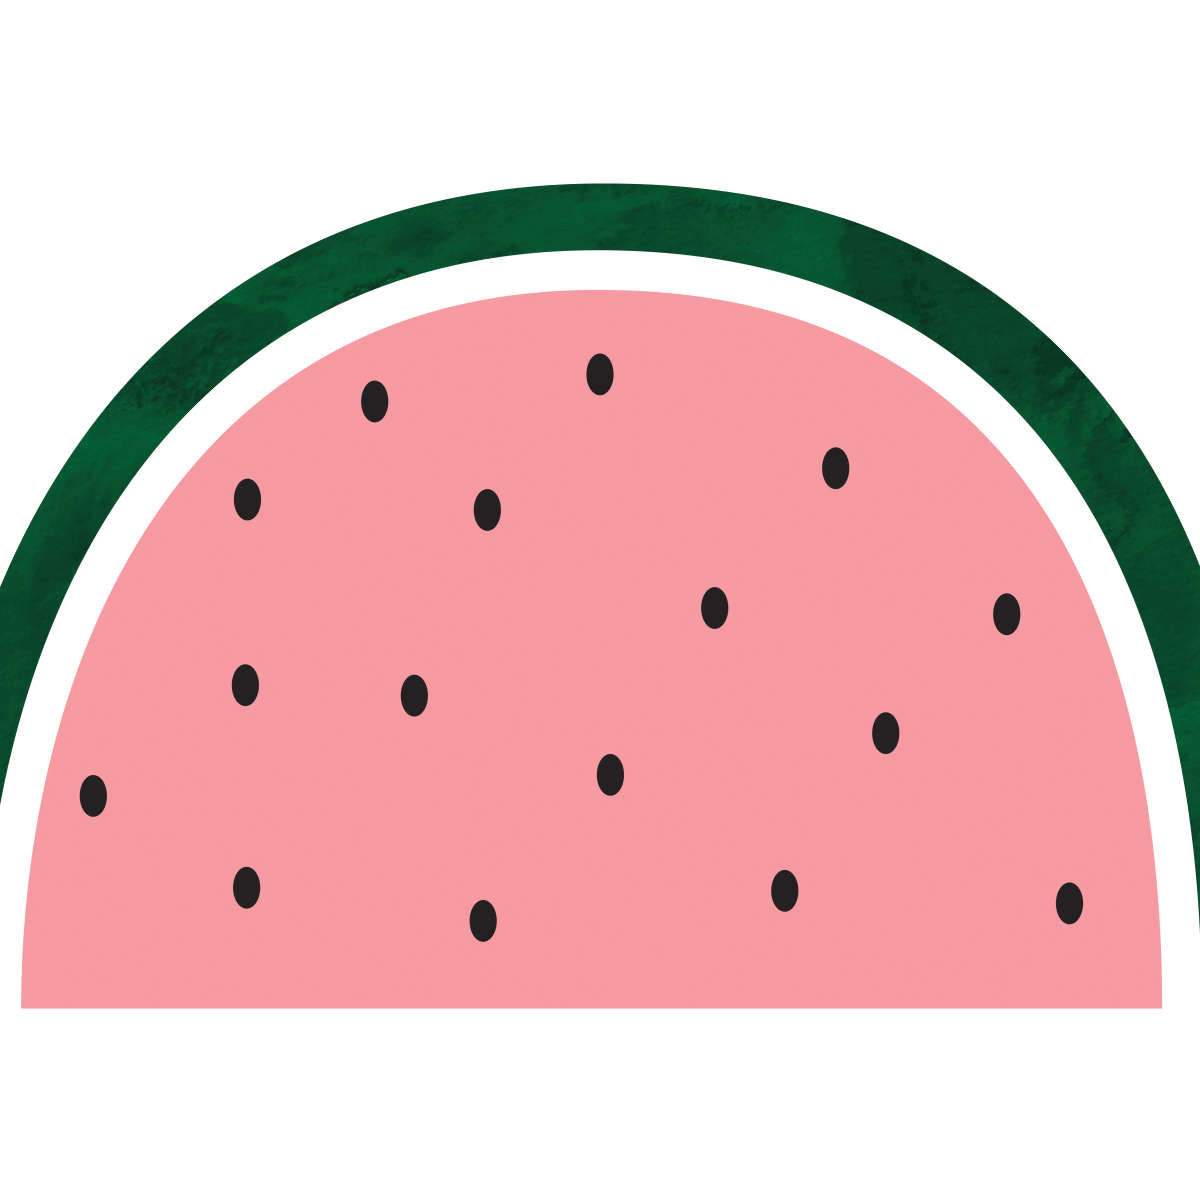 Watermelon Wall Art